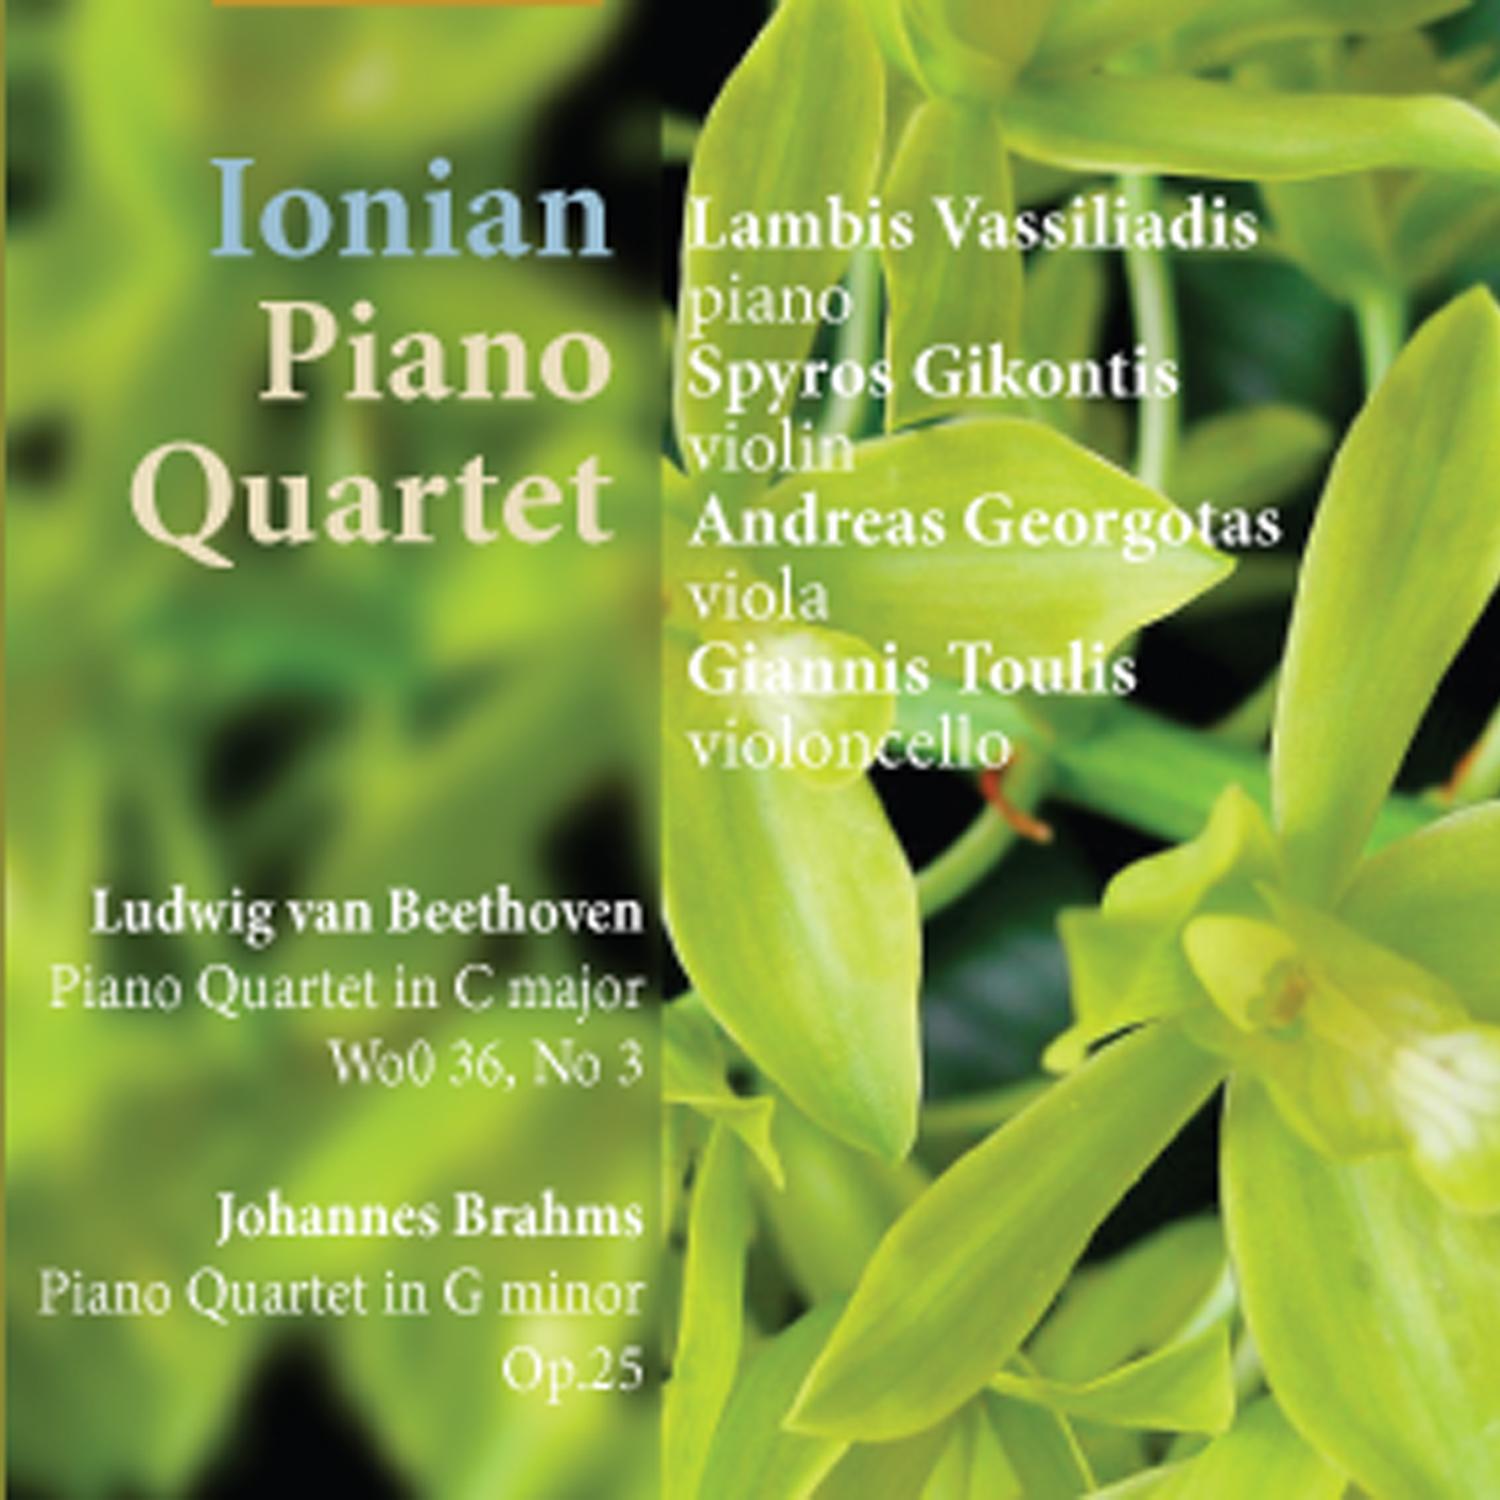 Ionian Piano Quartet专辑